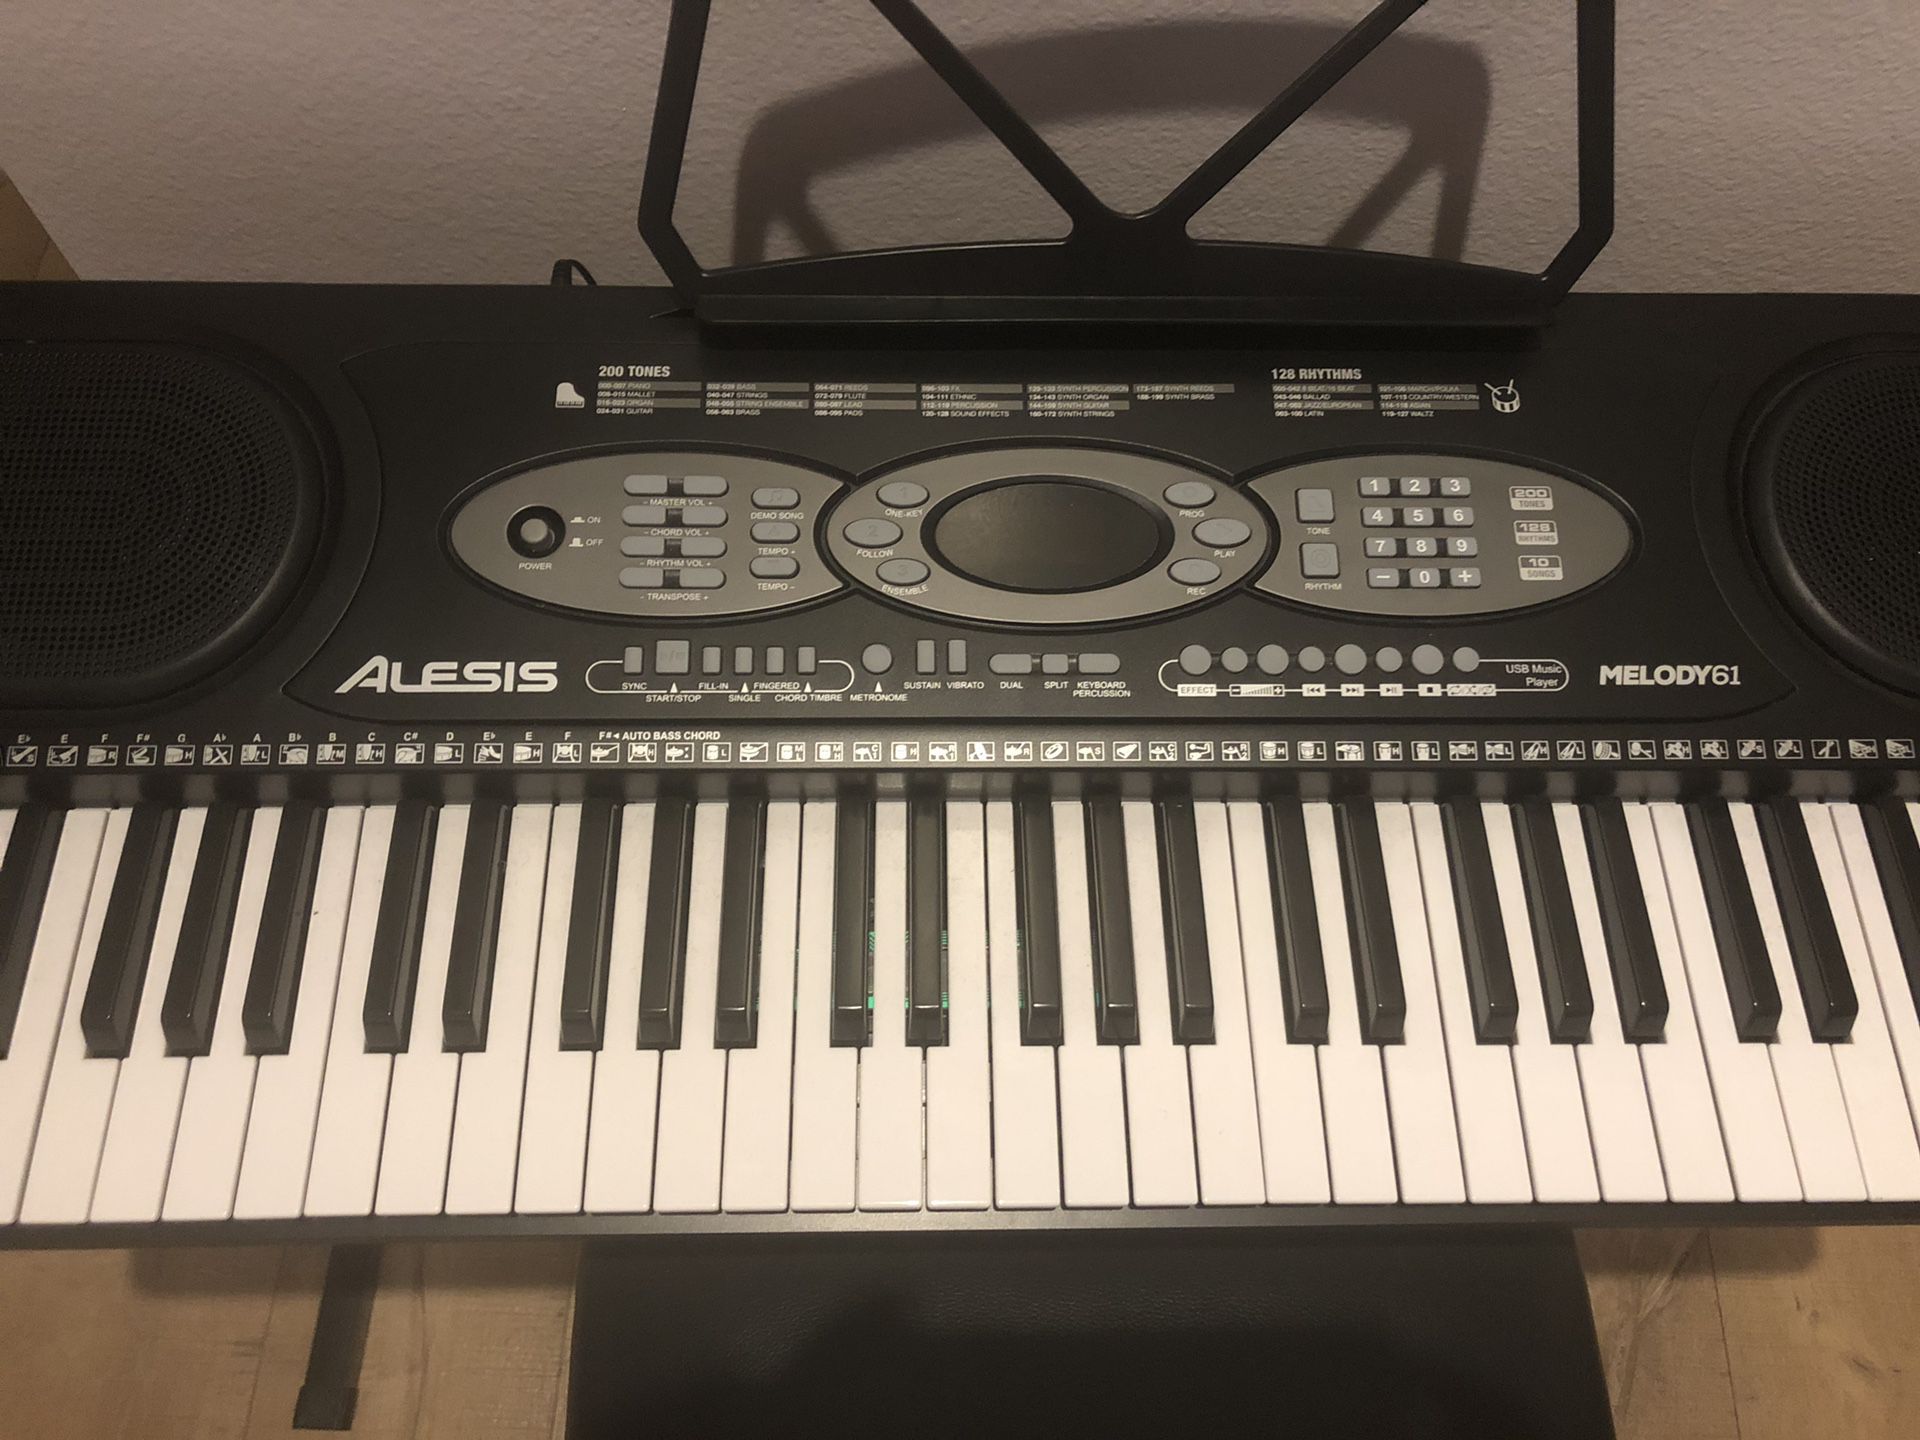 Alesis - Introducing The Alesis Melody 61 MKII, a 61-key